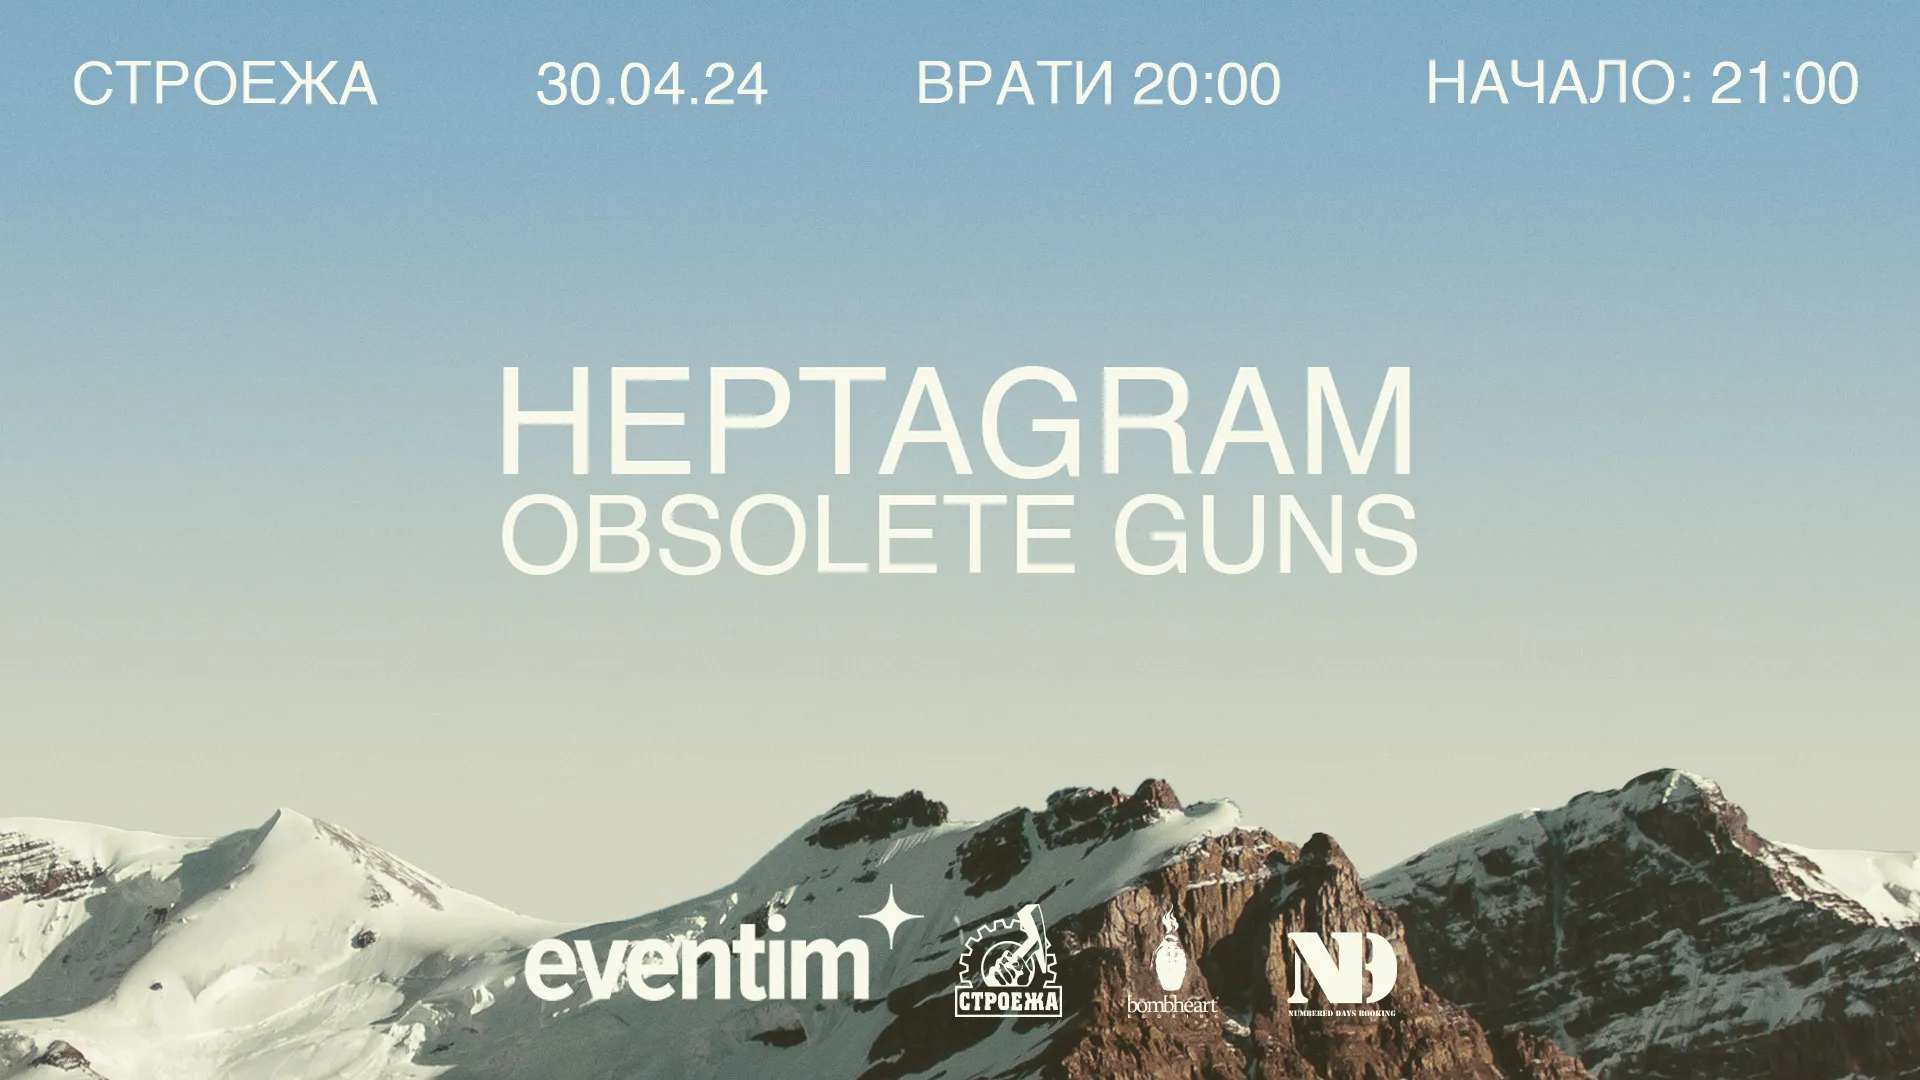 Heptagram & Obsolete Guns